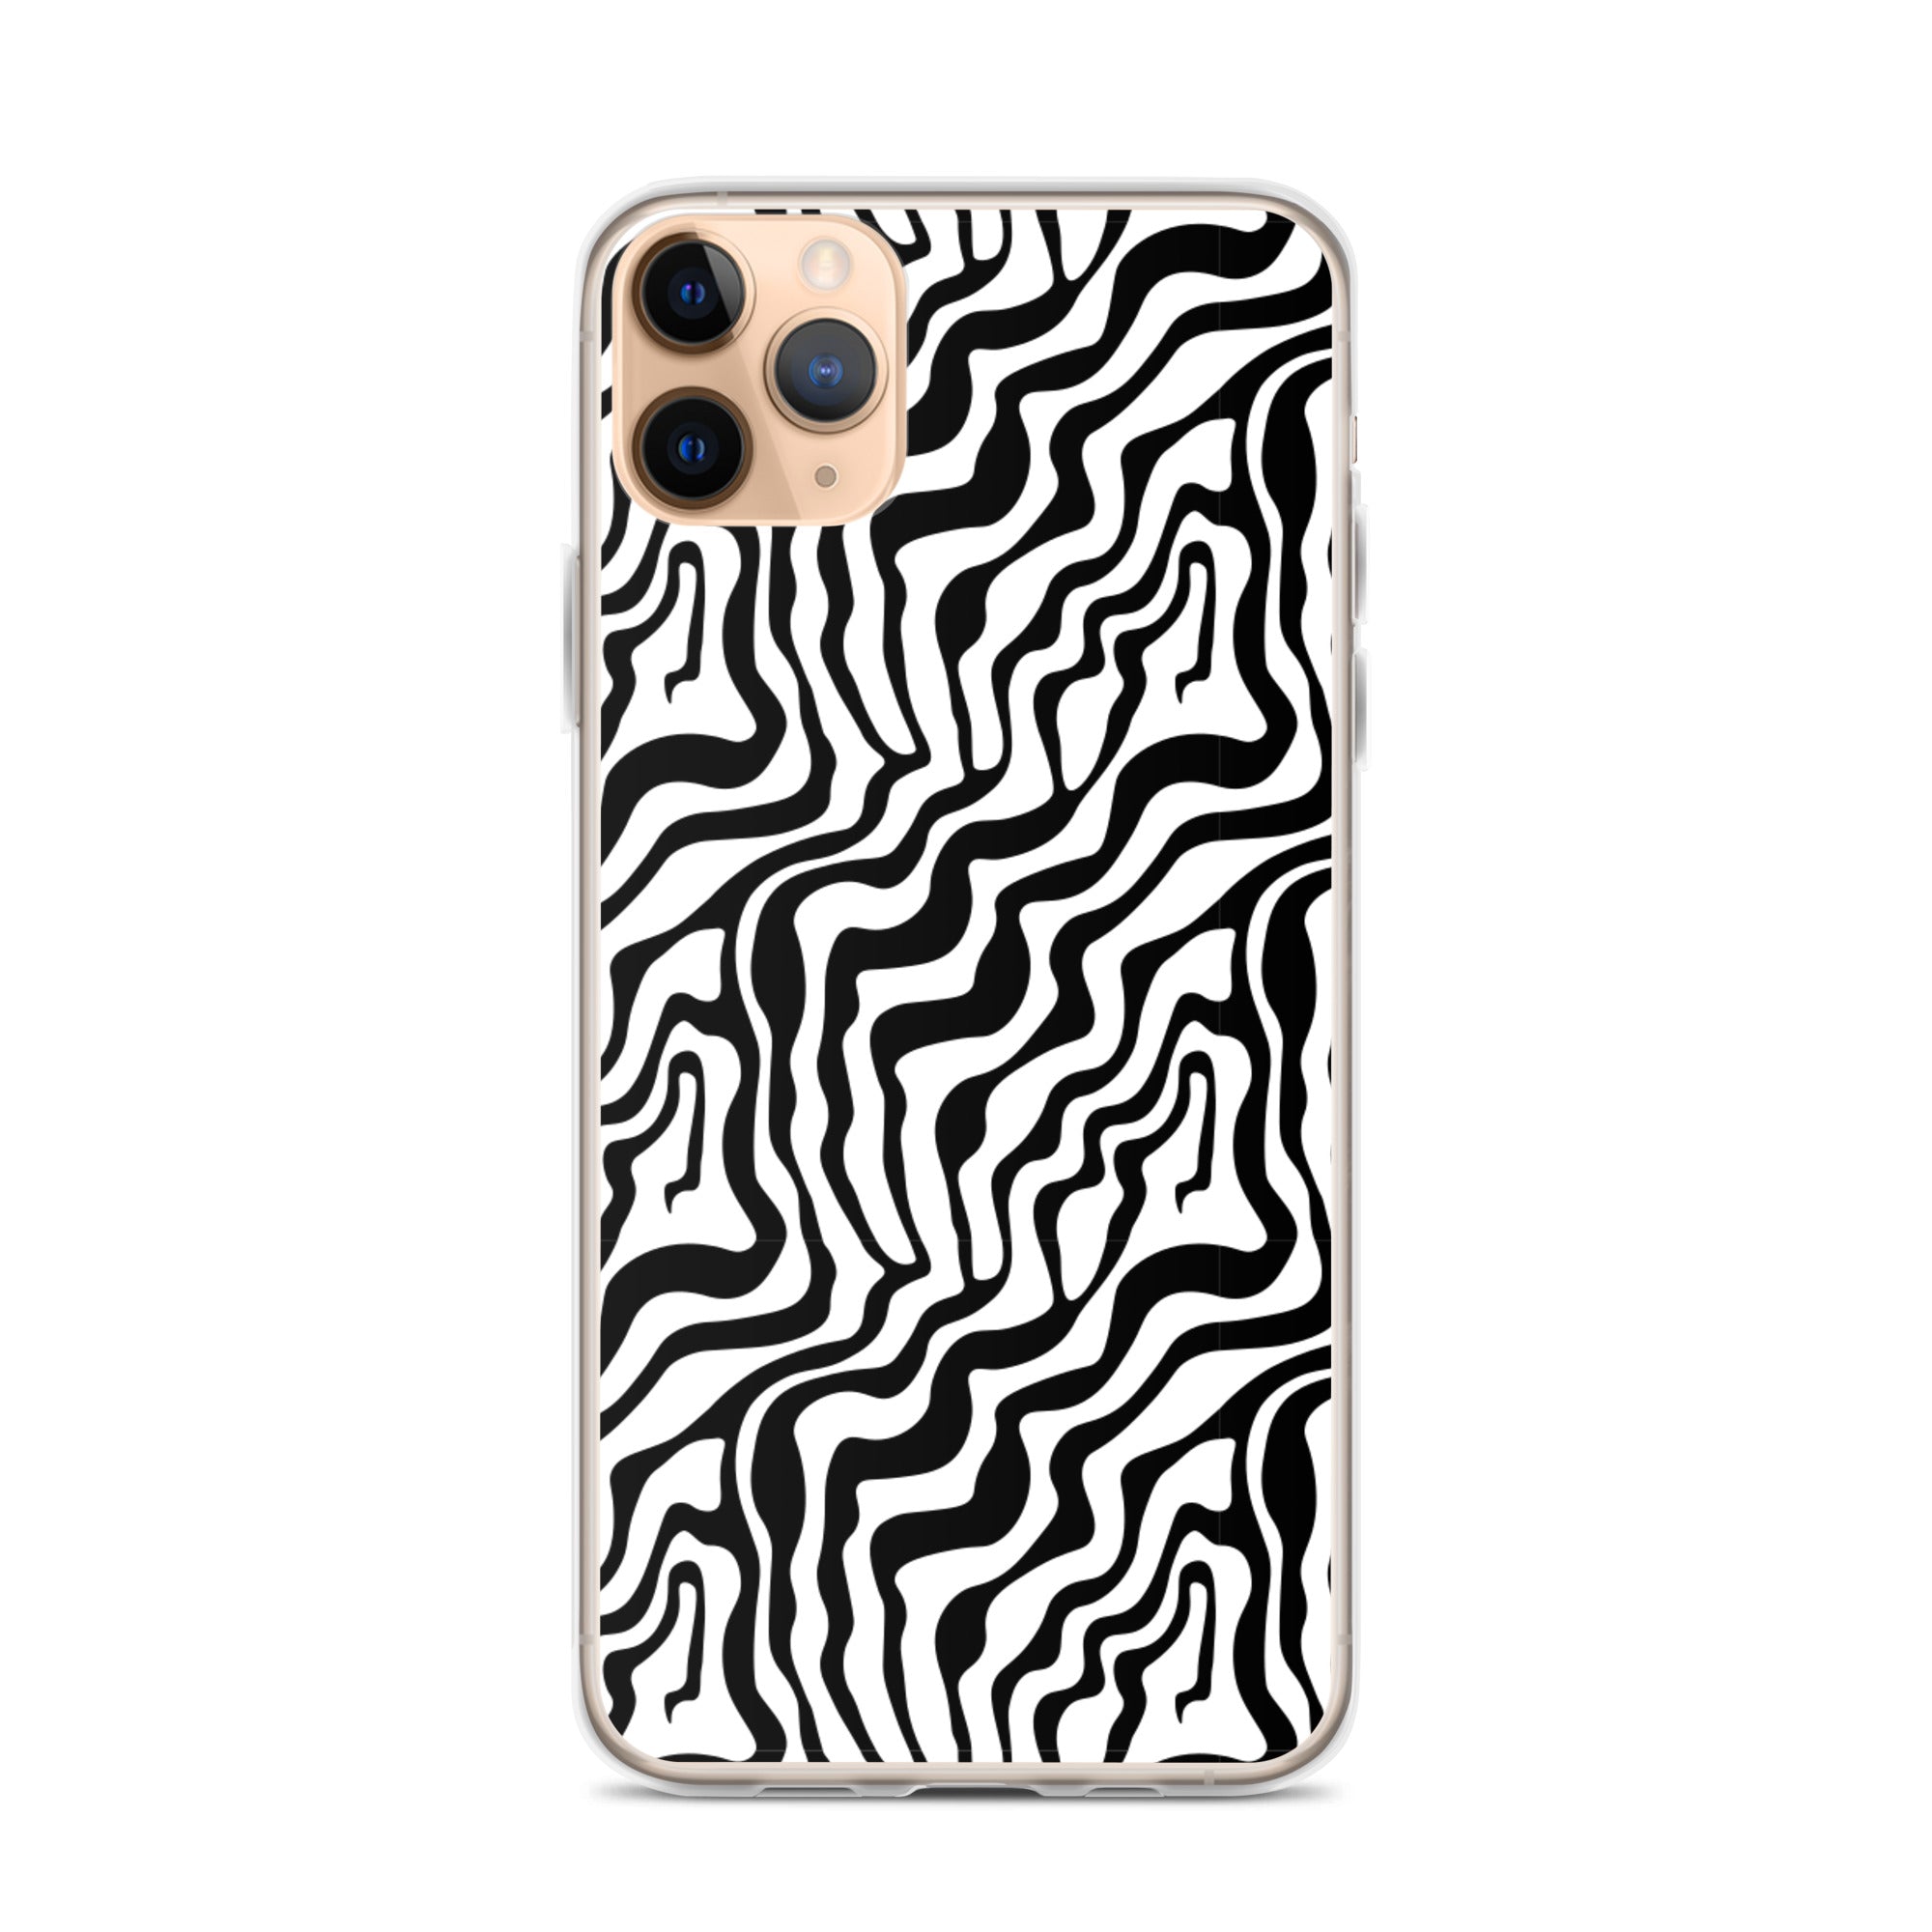 Zebra iPhone Case